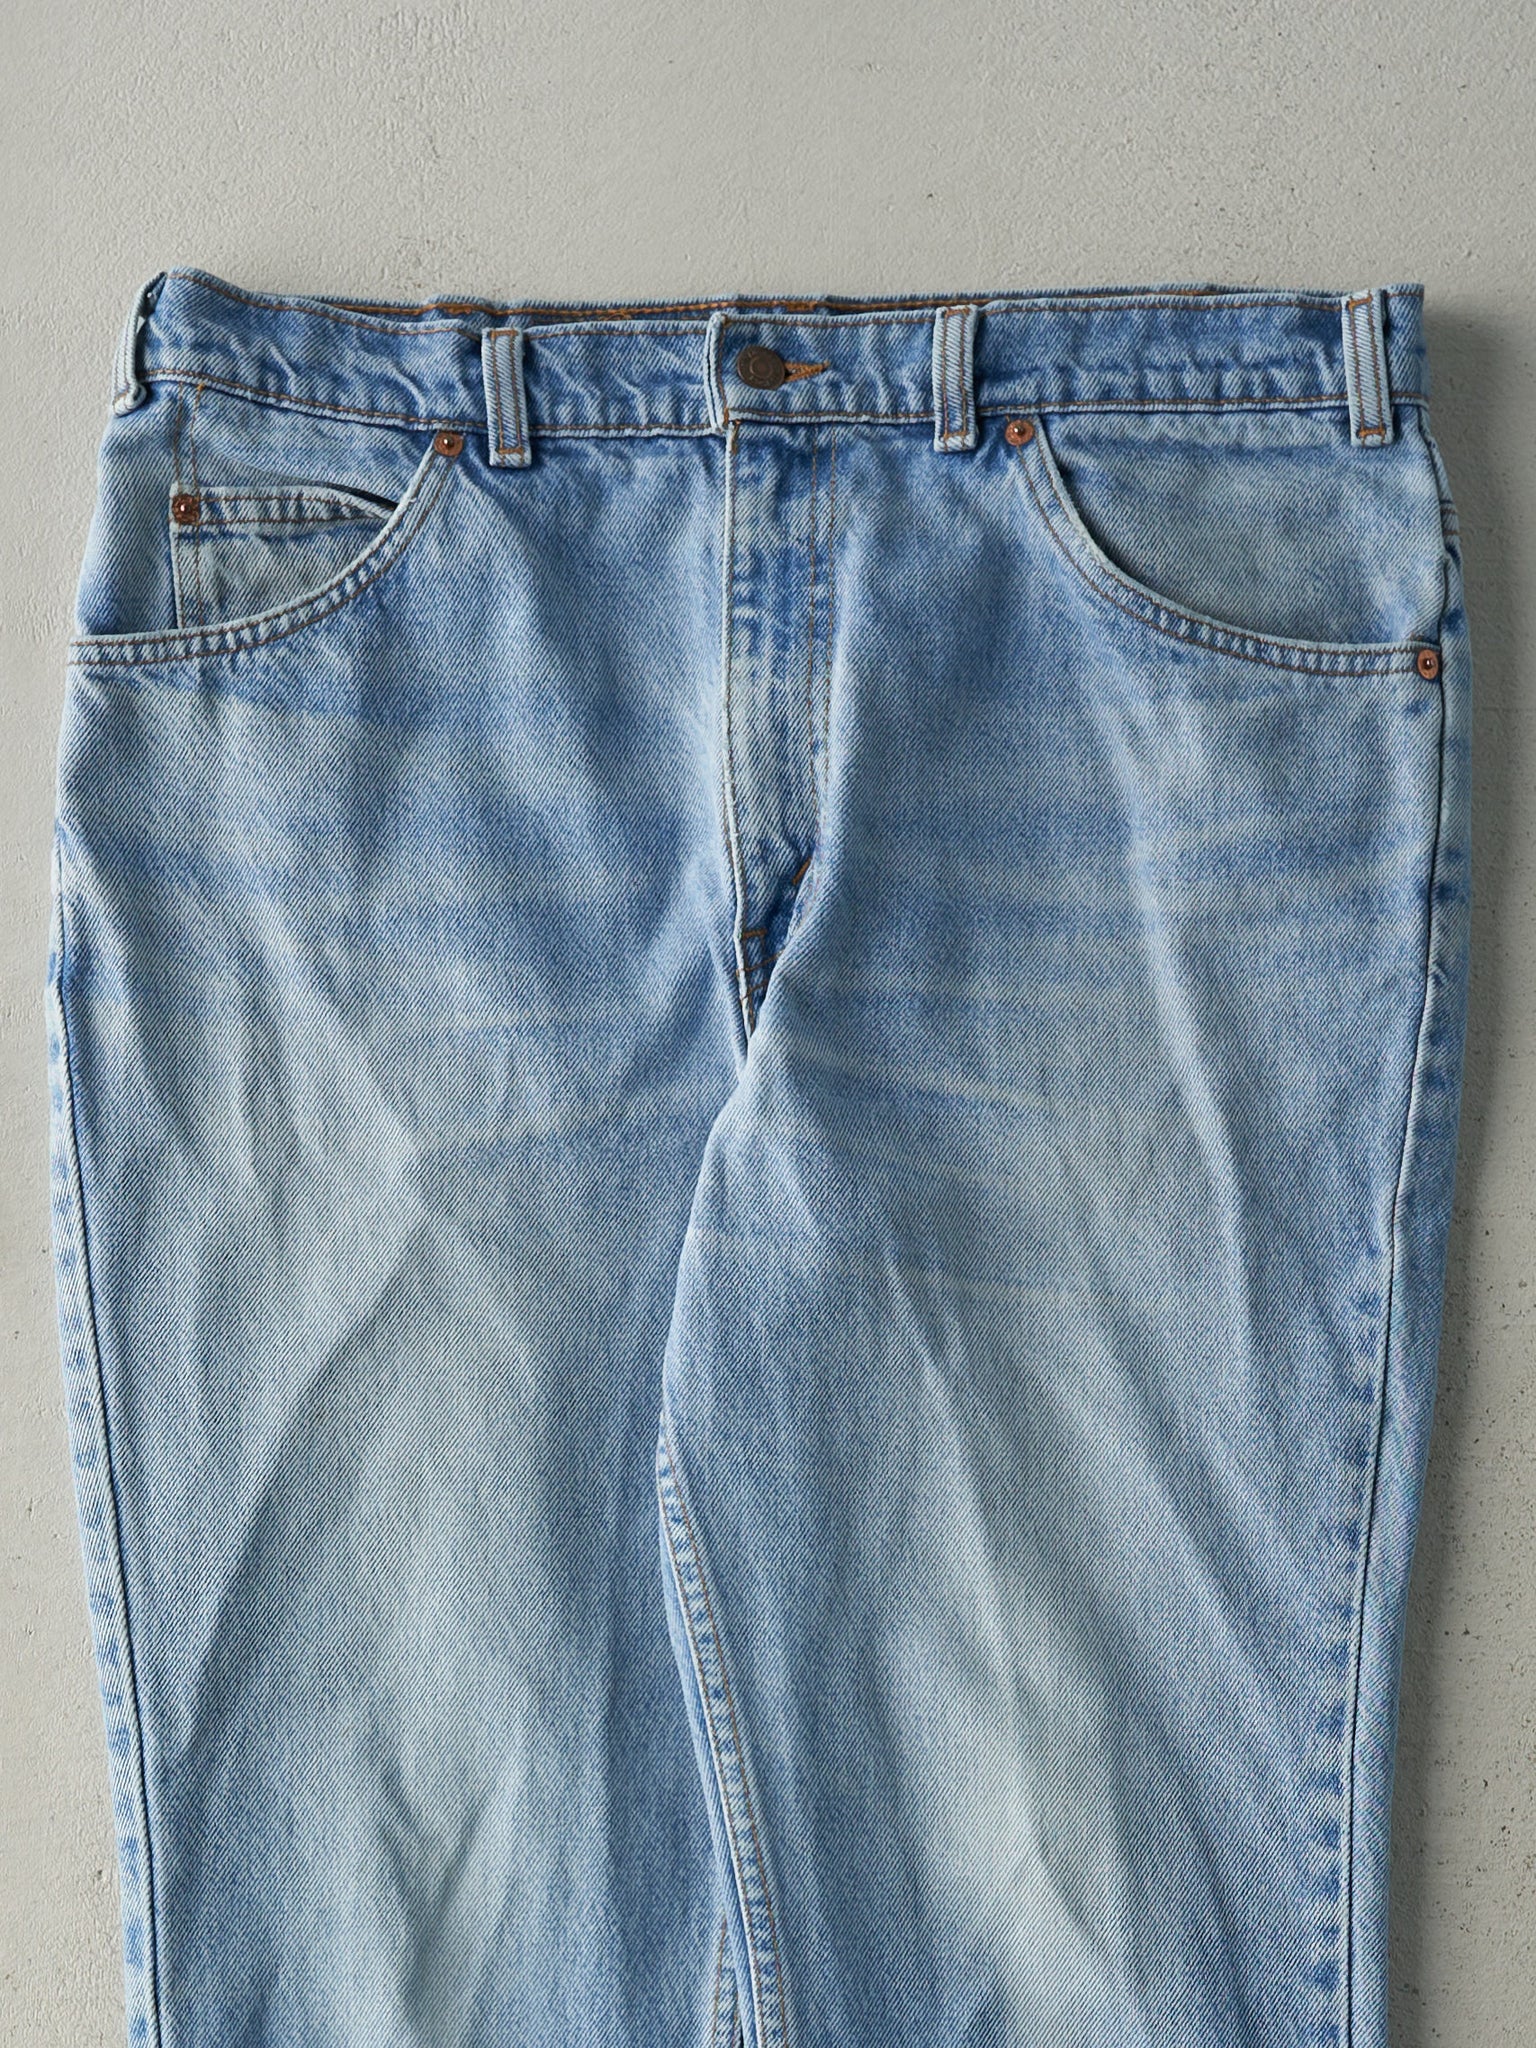 Vintage 80s Light Wash Levi's 631 Orange Tab Jeans (34x30)